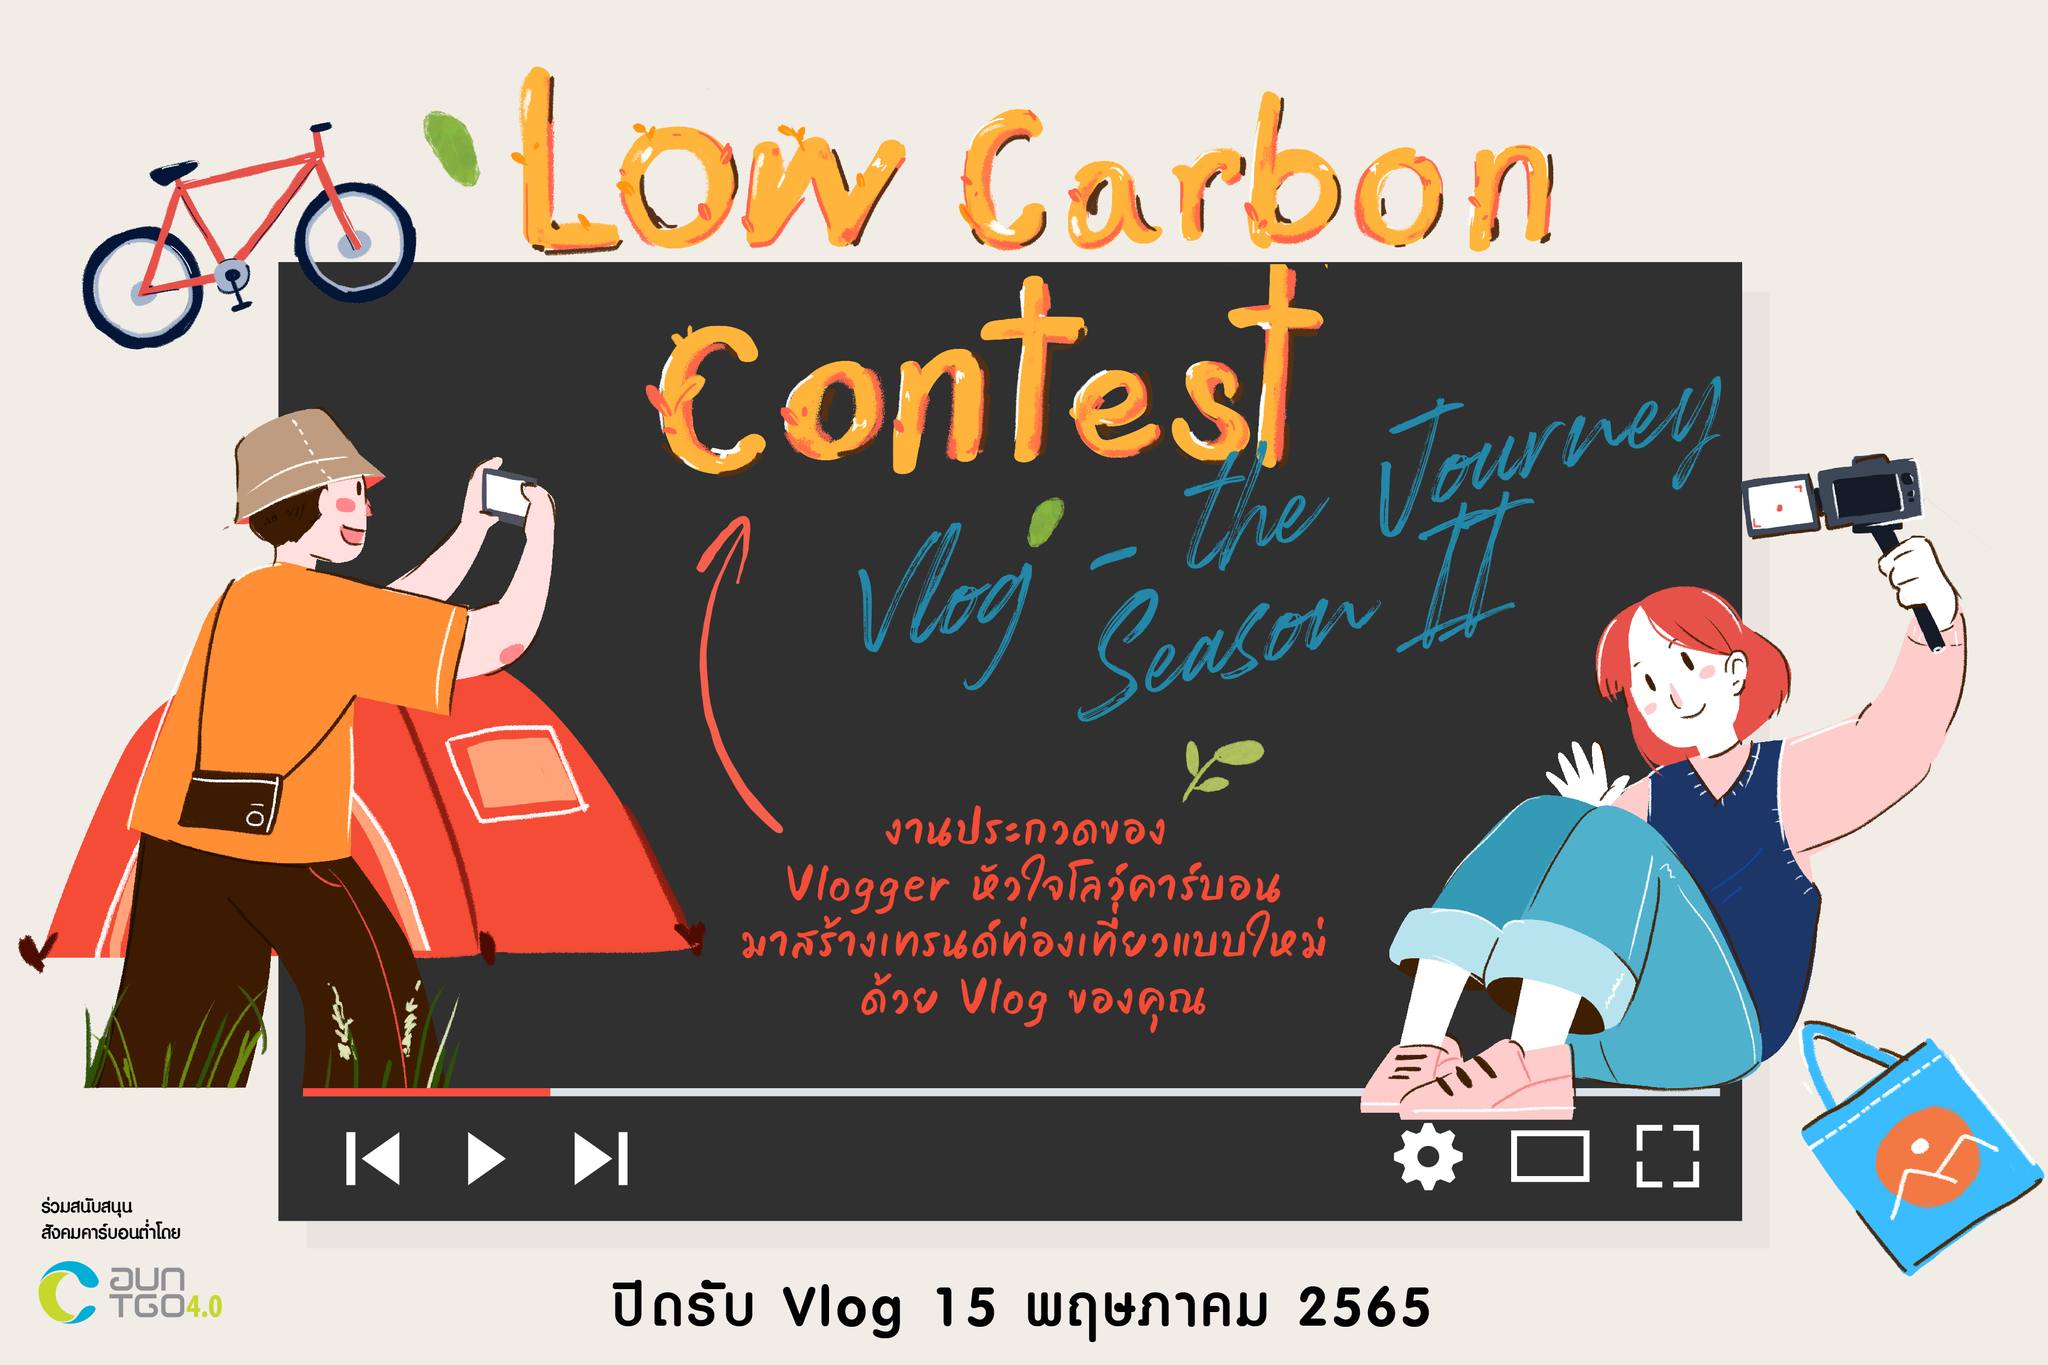 Low Carbon Contest : Vlog the Journey Season II องค์การบริหารจัดการก๊าซเรือนกระจก